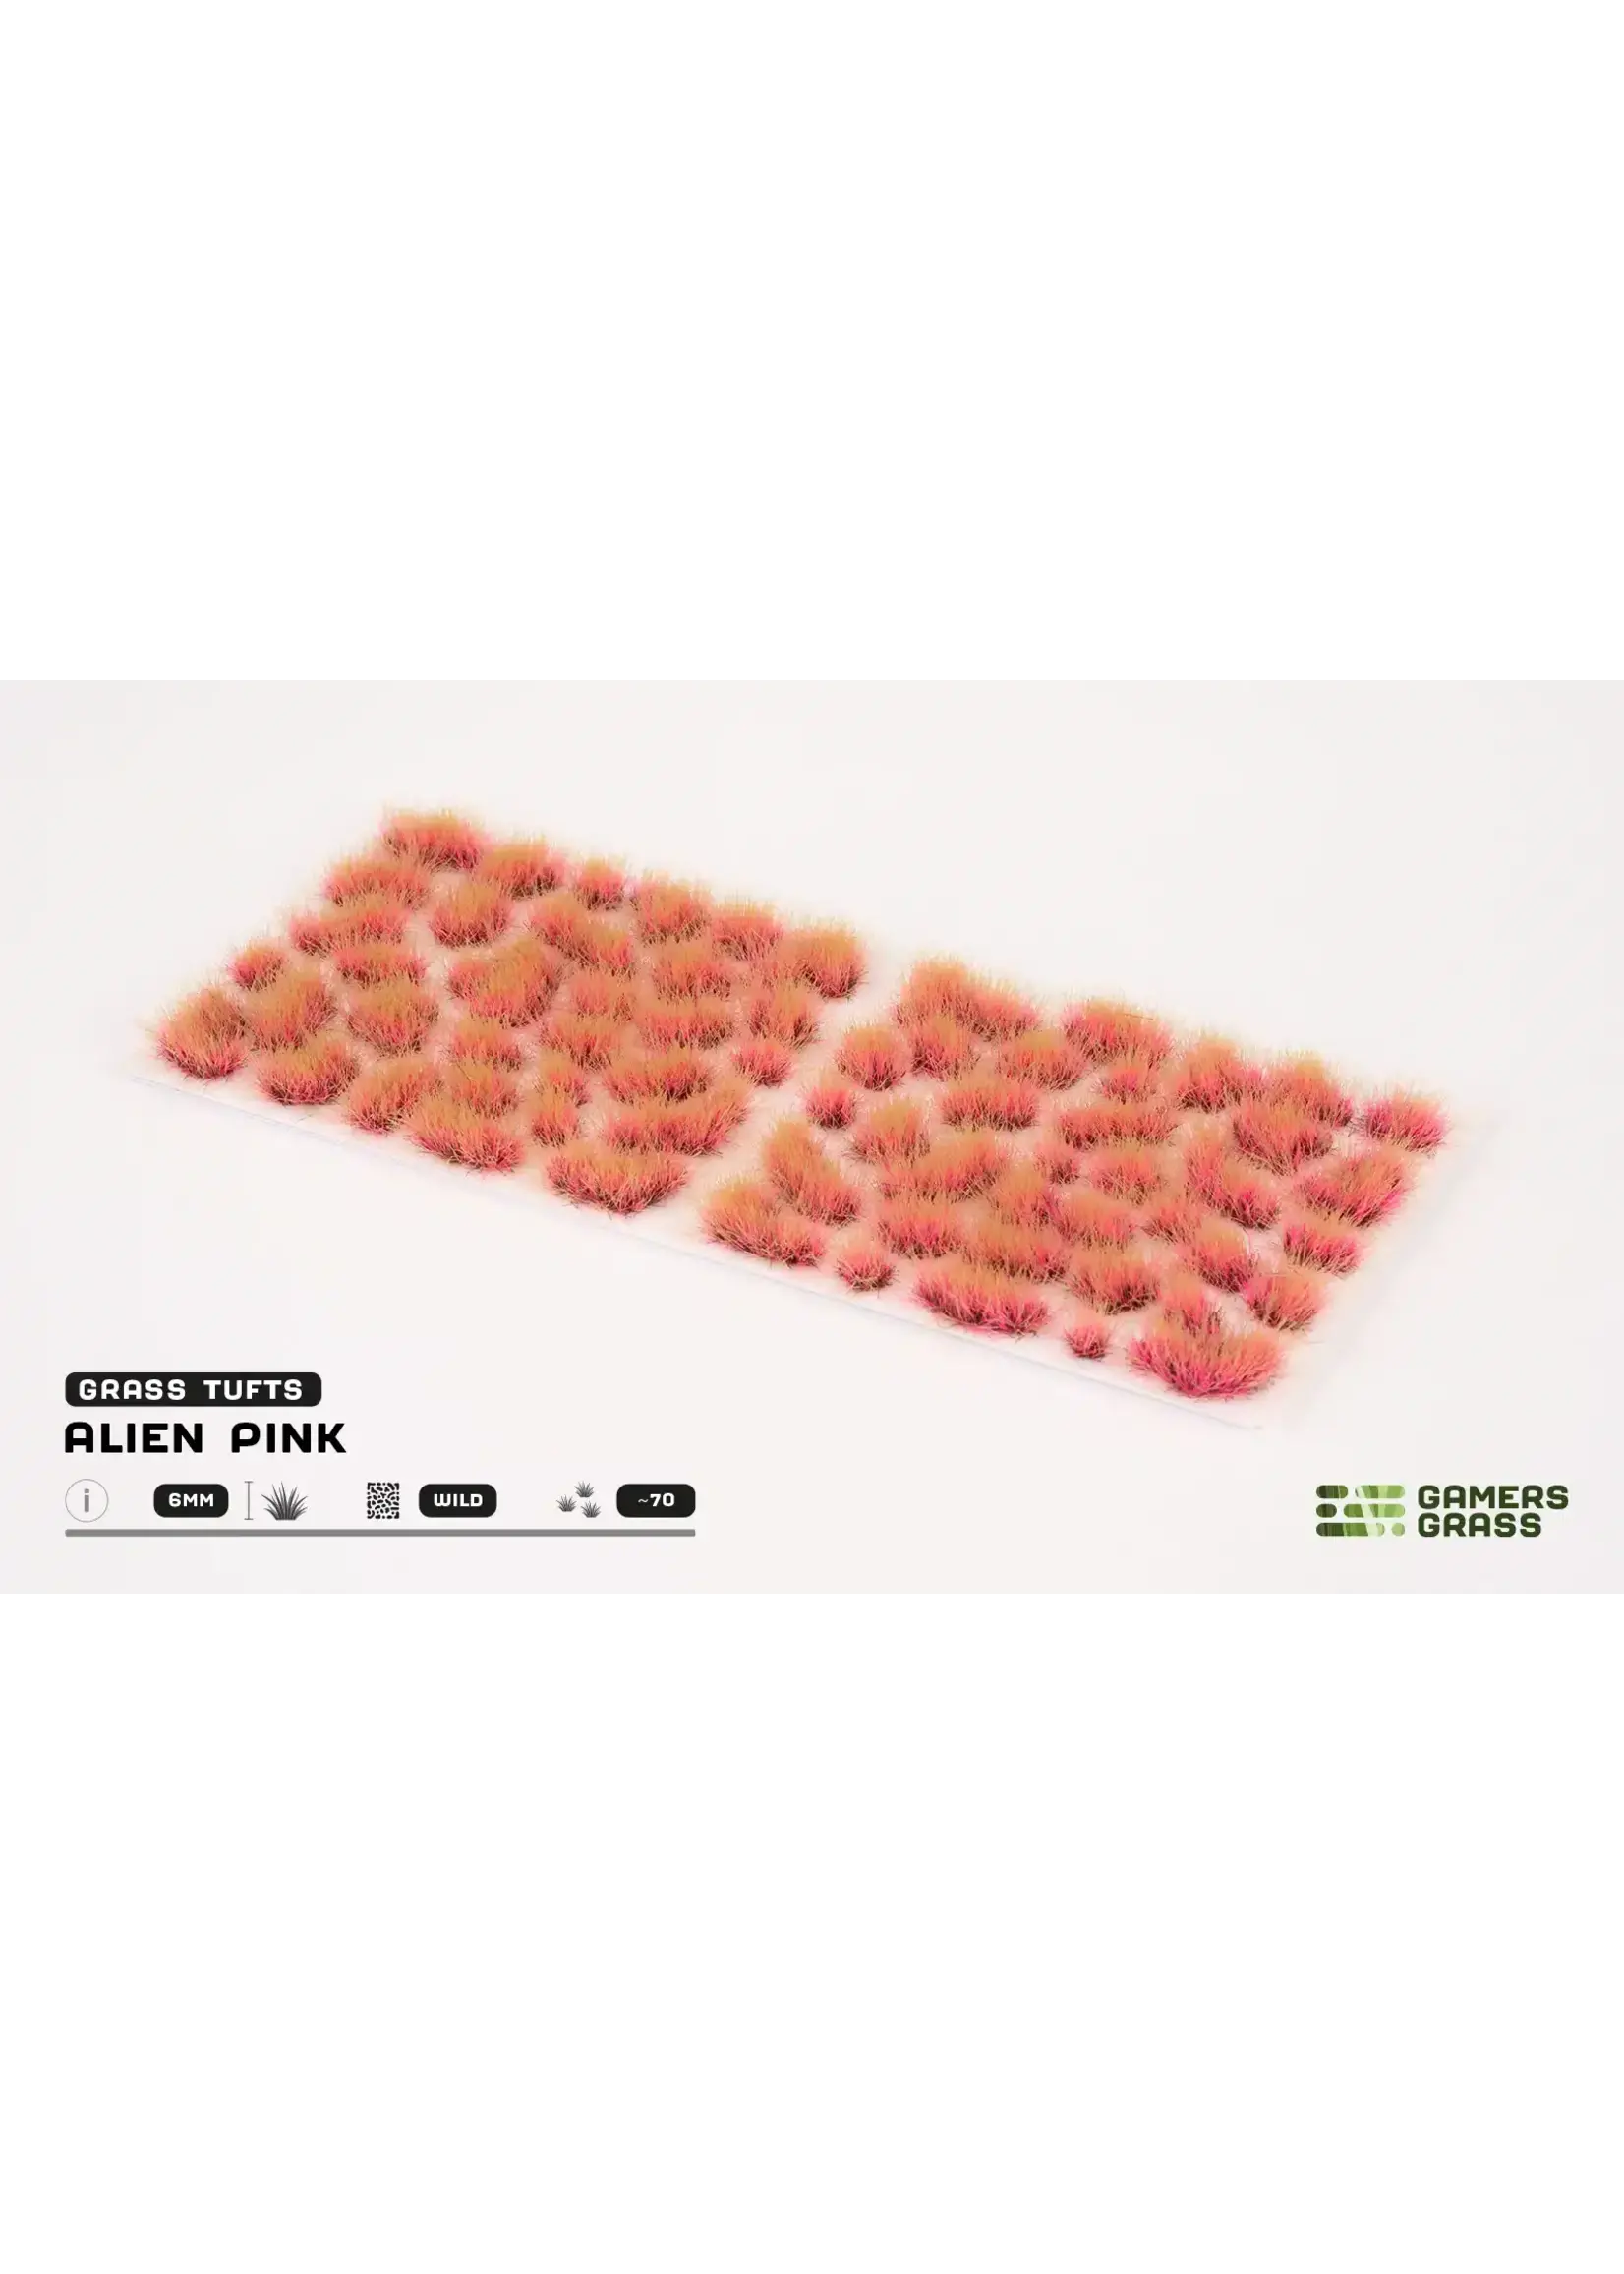 Gamers Grass Alien Pink Tufts (6mm)